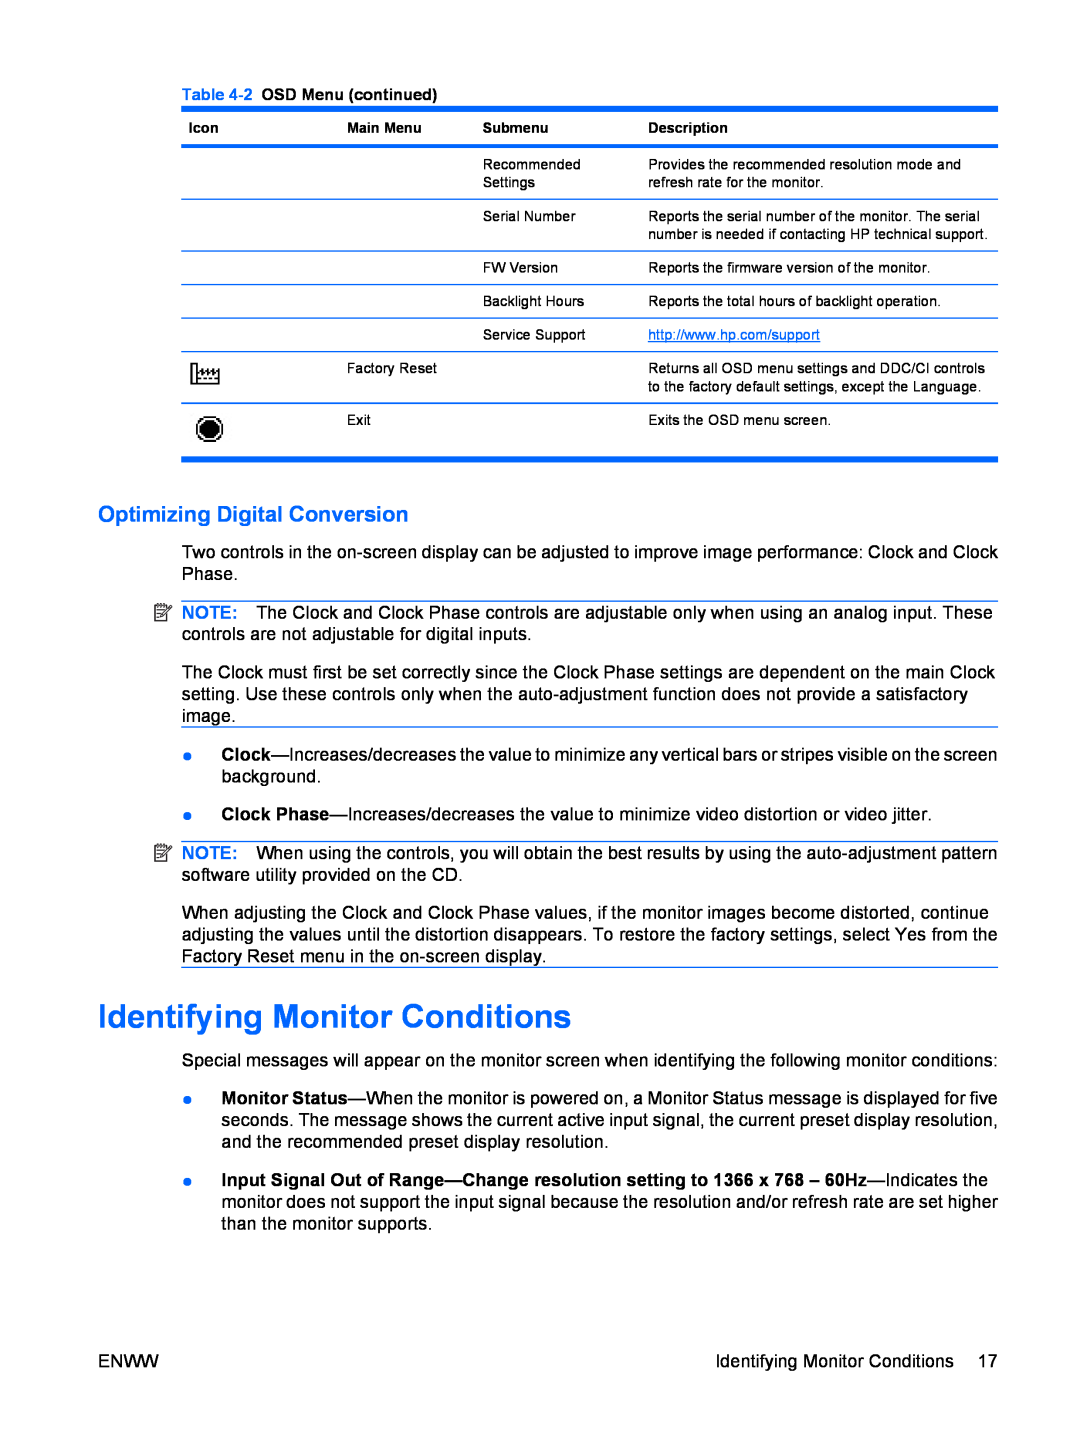 HP CQ1859E manual Identifying Monitor Conditions, Optimizing Digital Conversion 